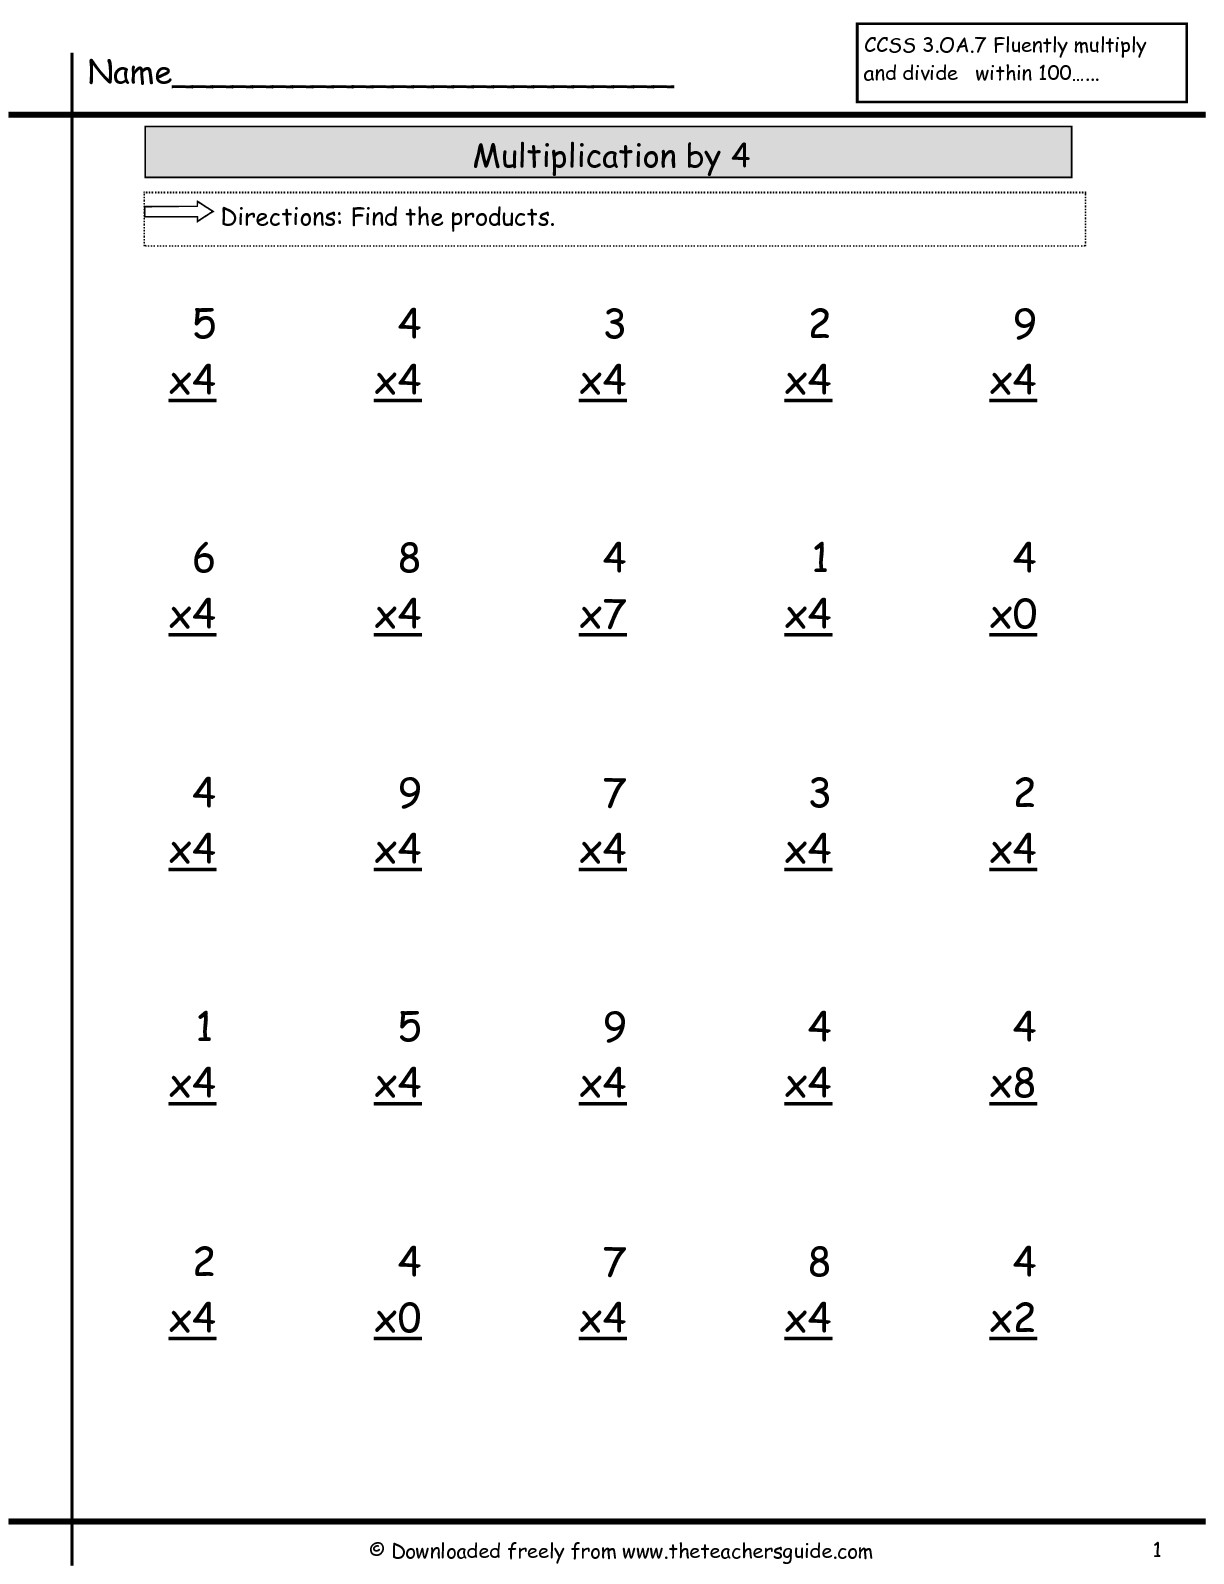 multiplication-worksheets-x4-printable-multiplication-flash-cards